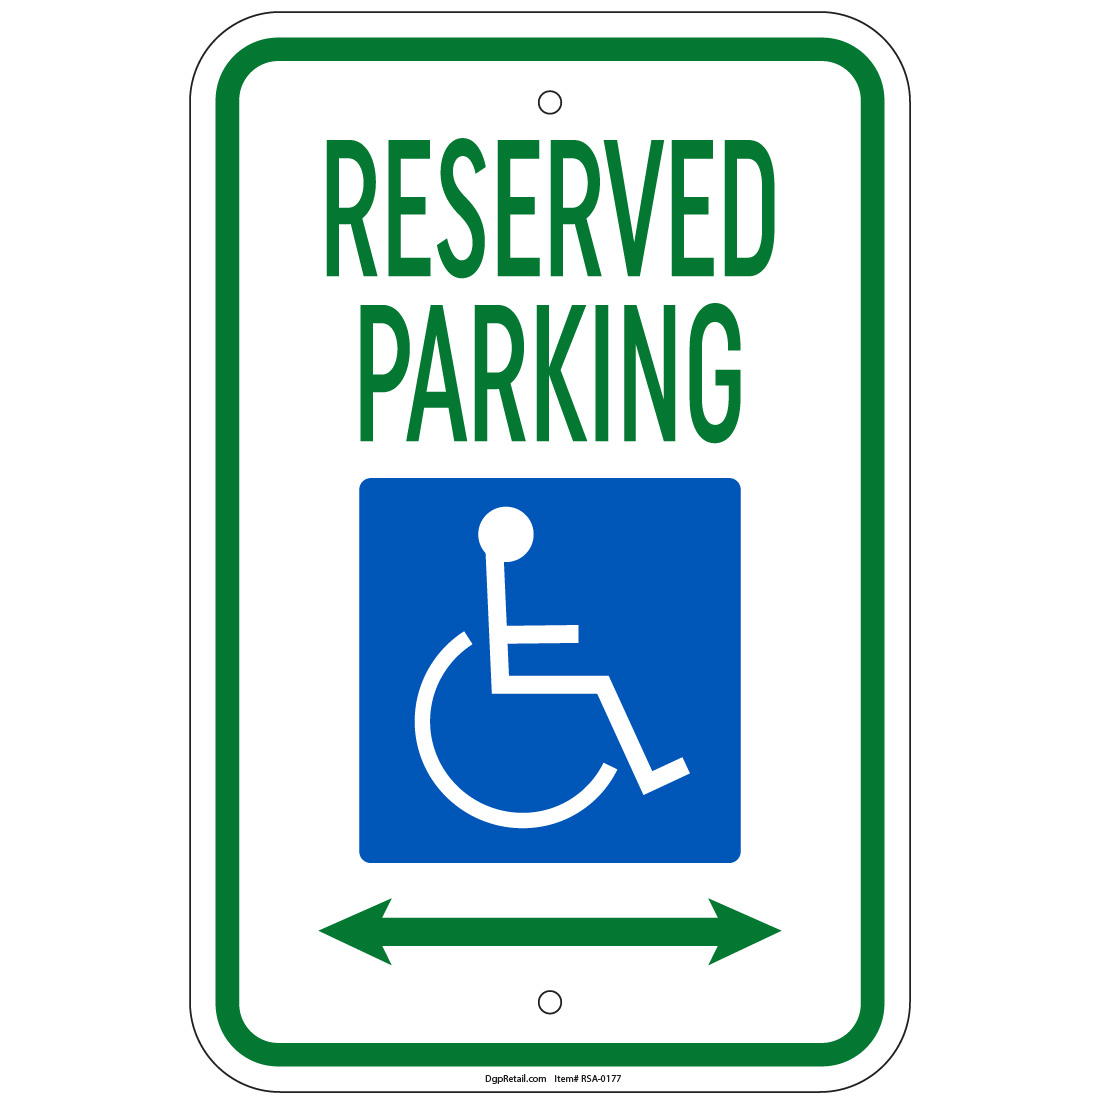 Reserved Parking w/Handicap Symbol & Arrow Left & Right Sign 8